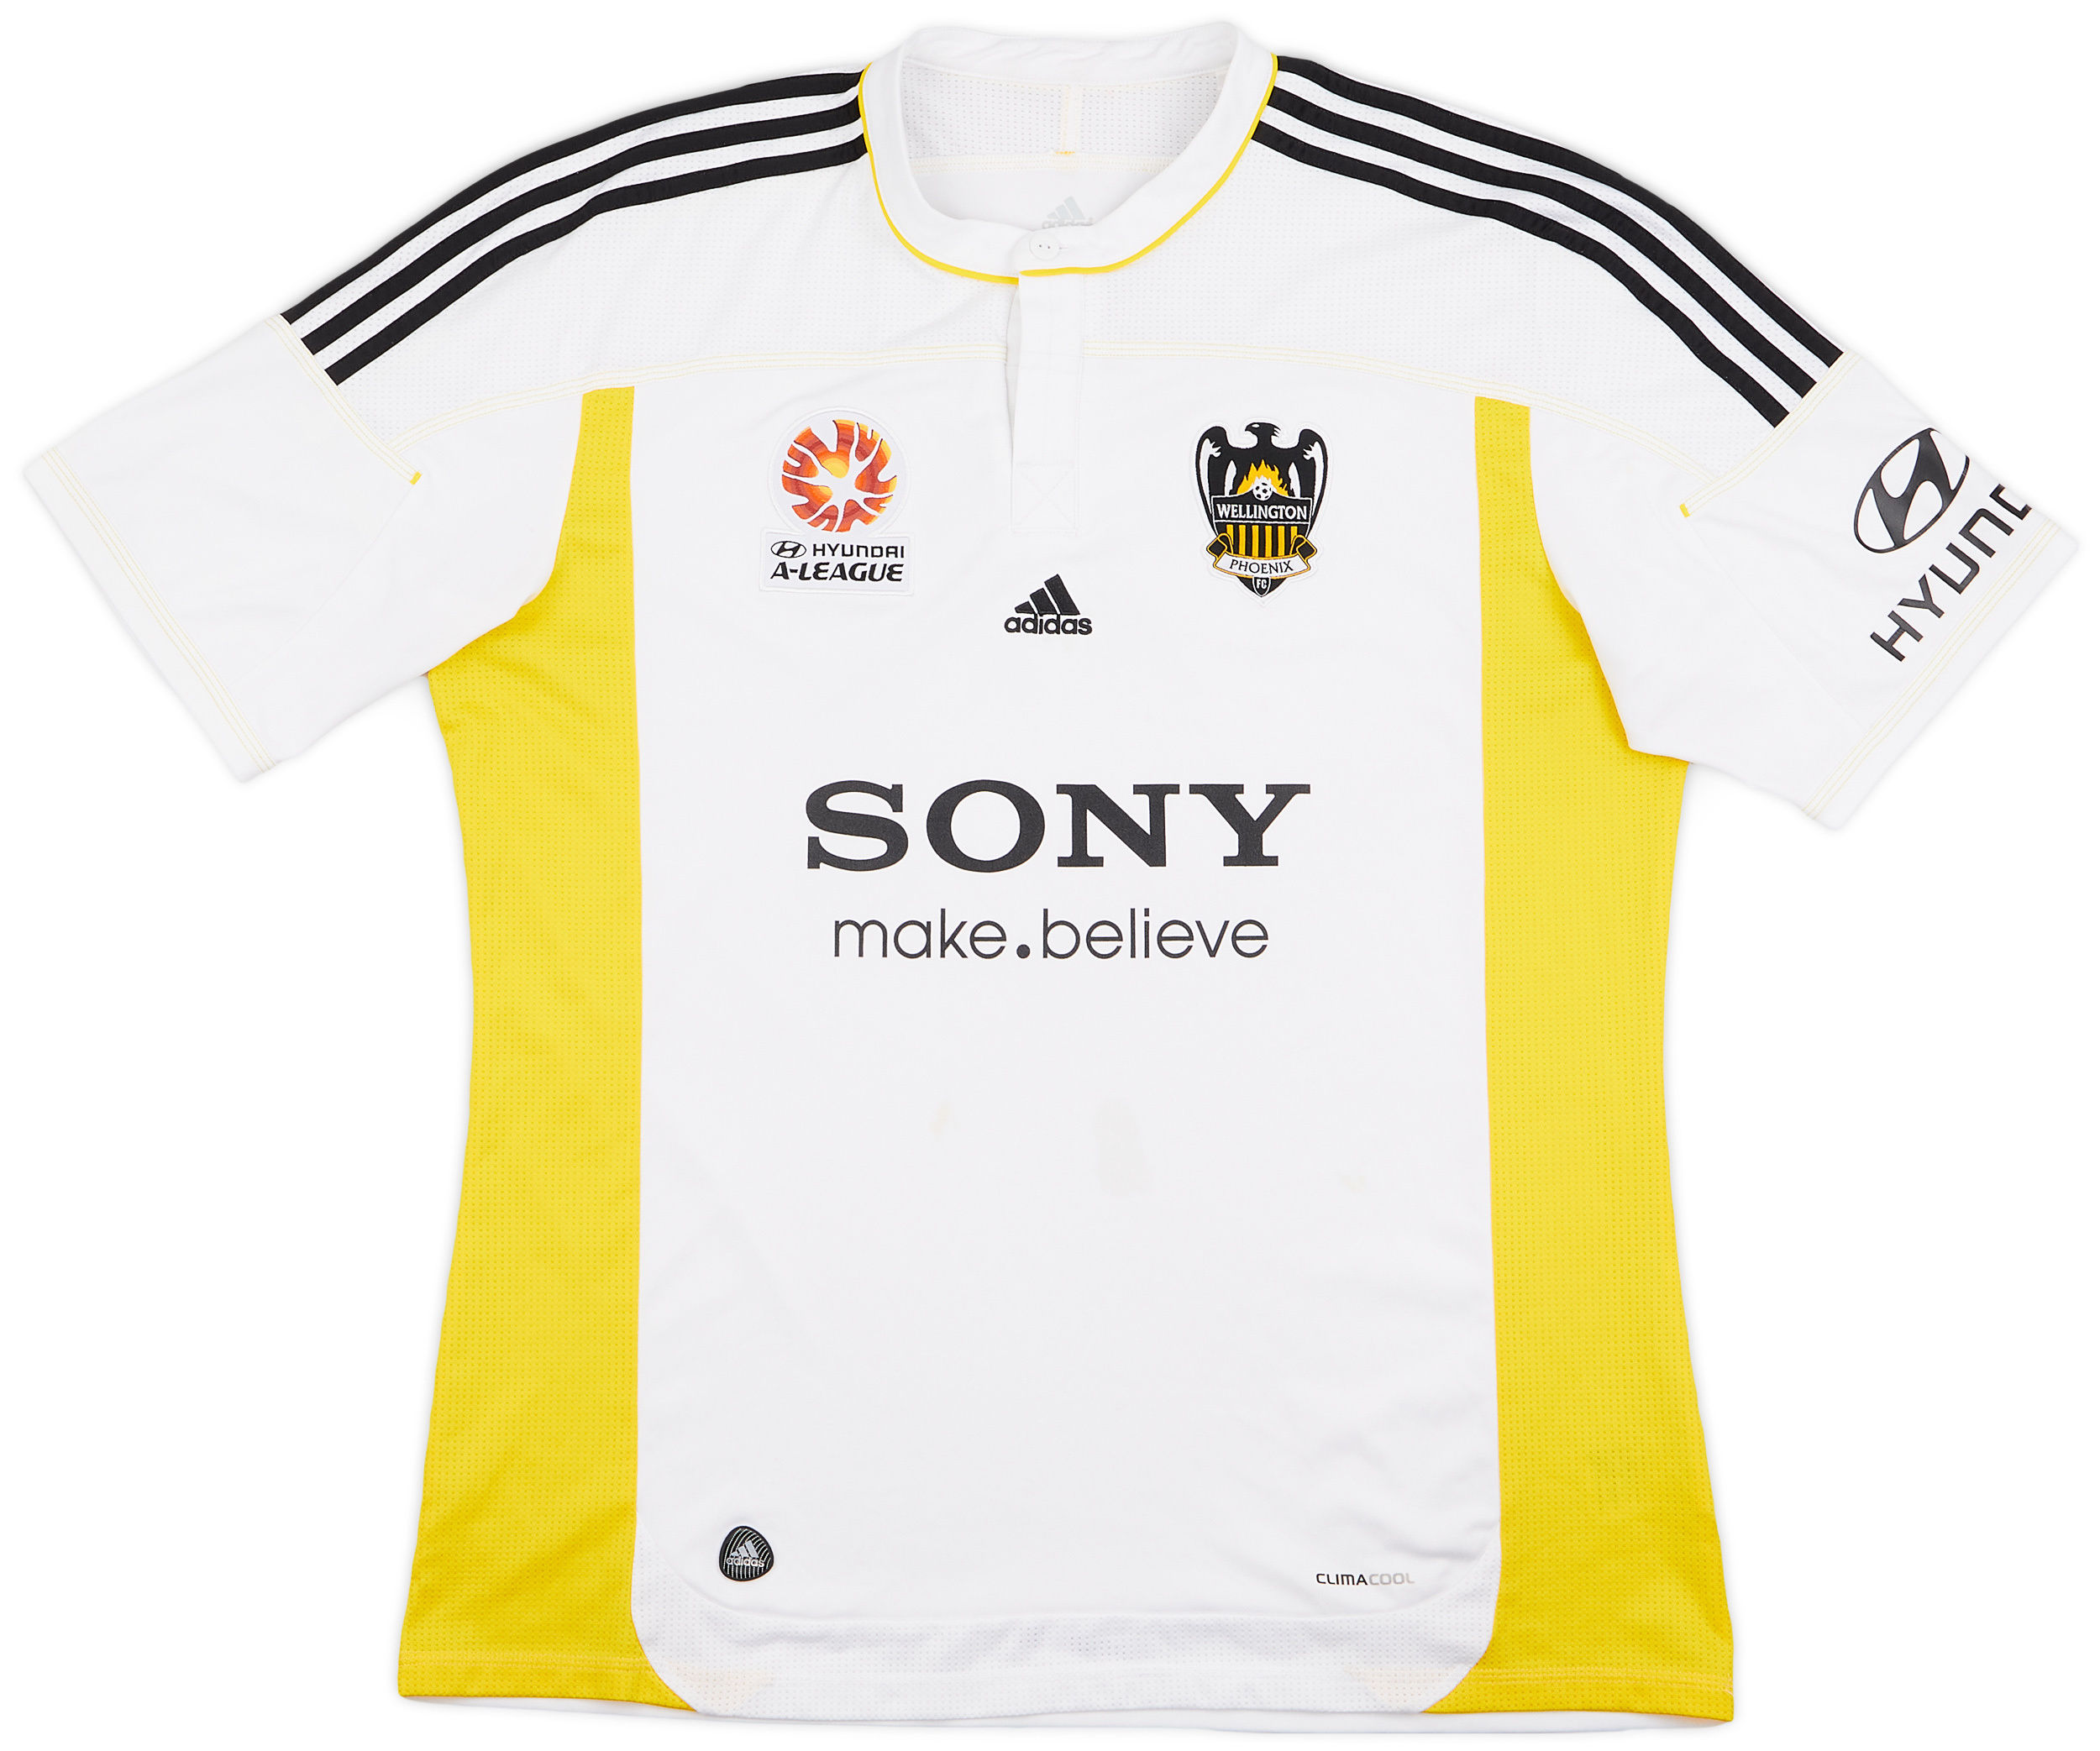 Retro Wellington Phoenix FC Shirt